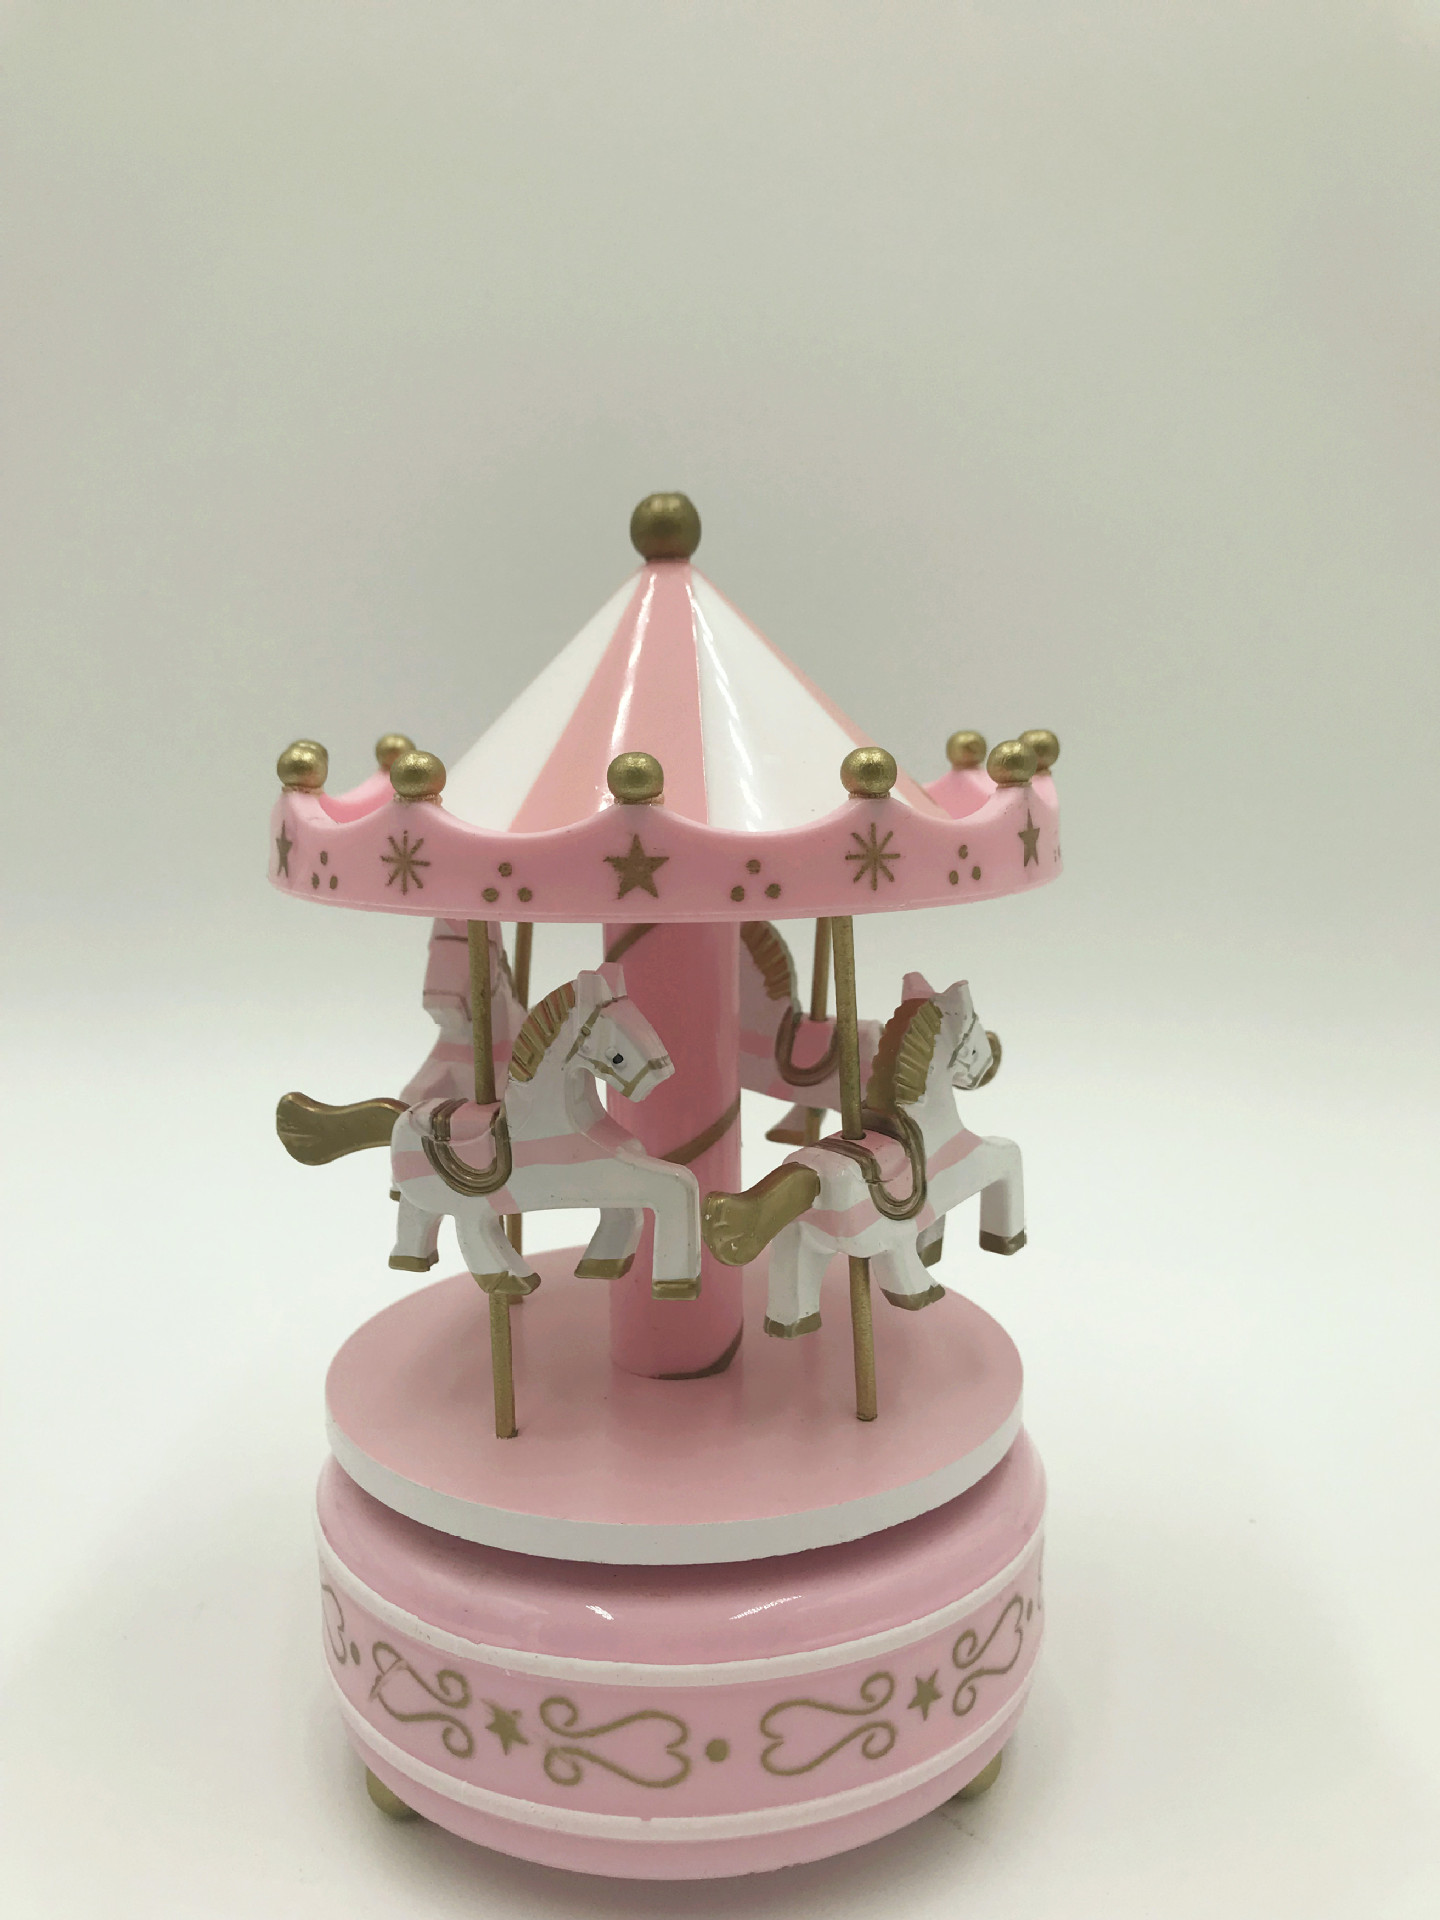 Grace's Blog 欣语心情: 旋转木马生日蛋糕 Carousel Birthday Cake